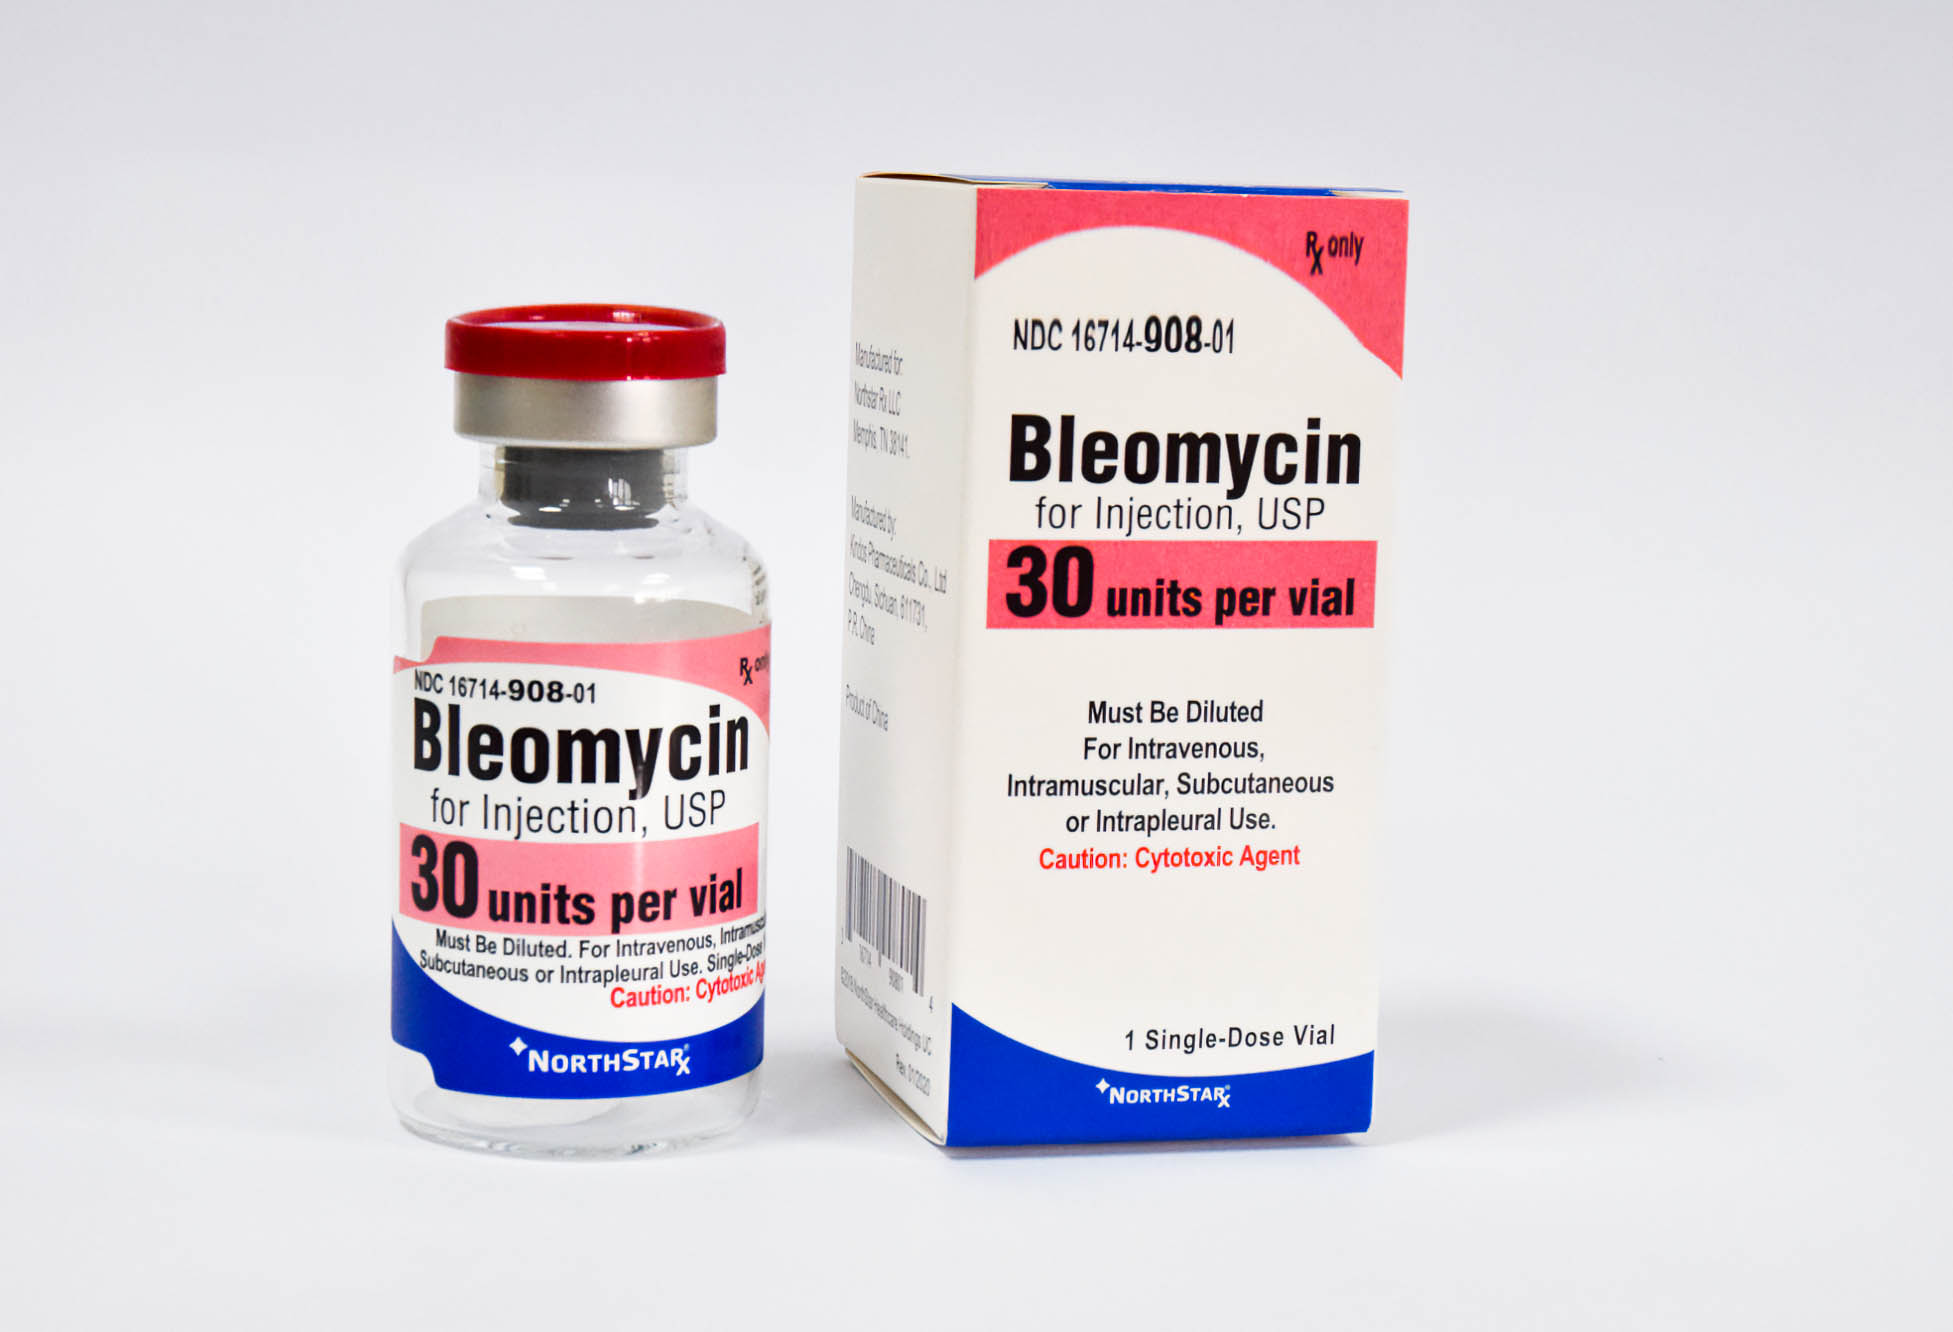 Bleomycin for Injection